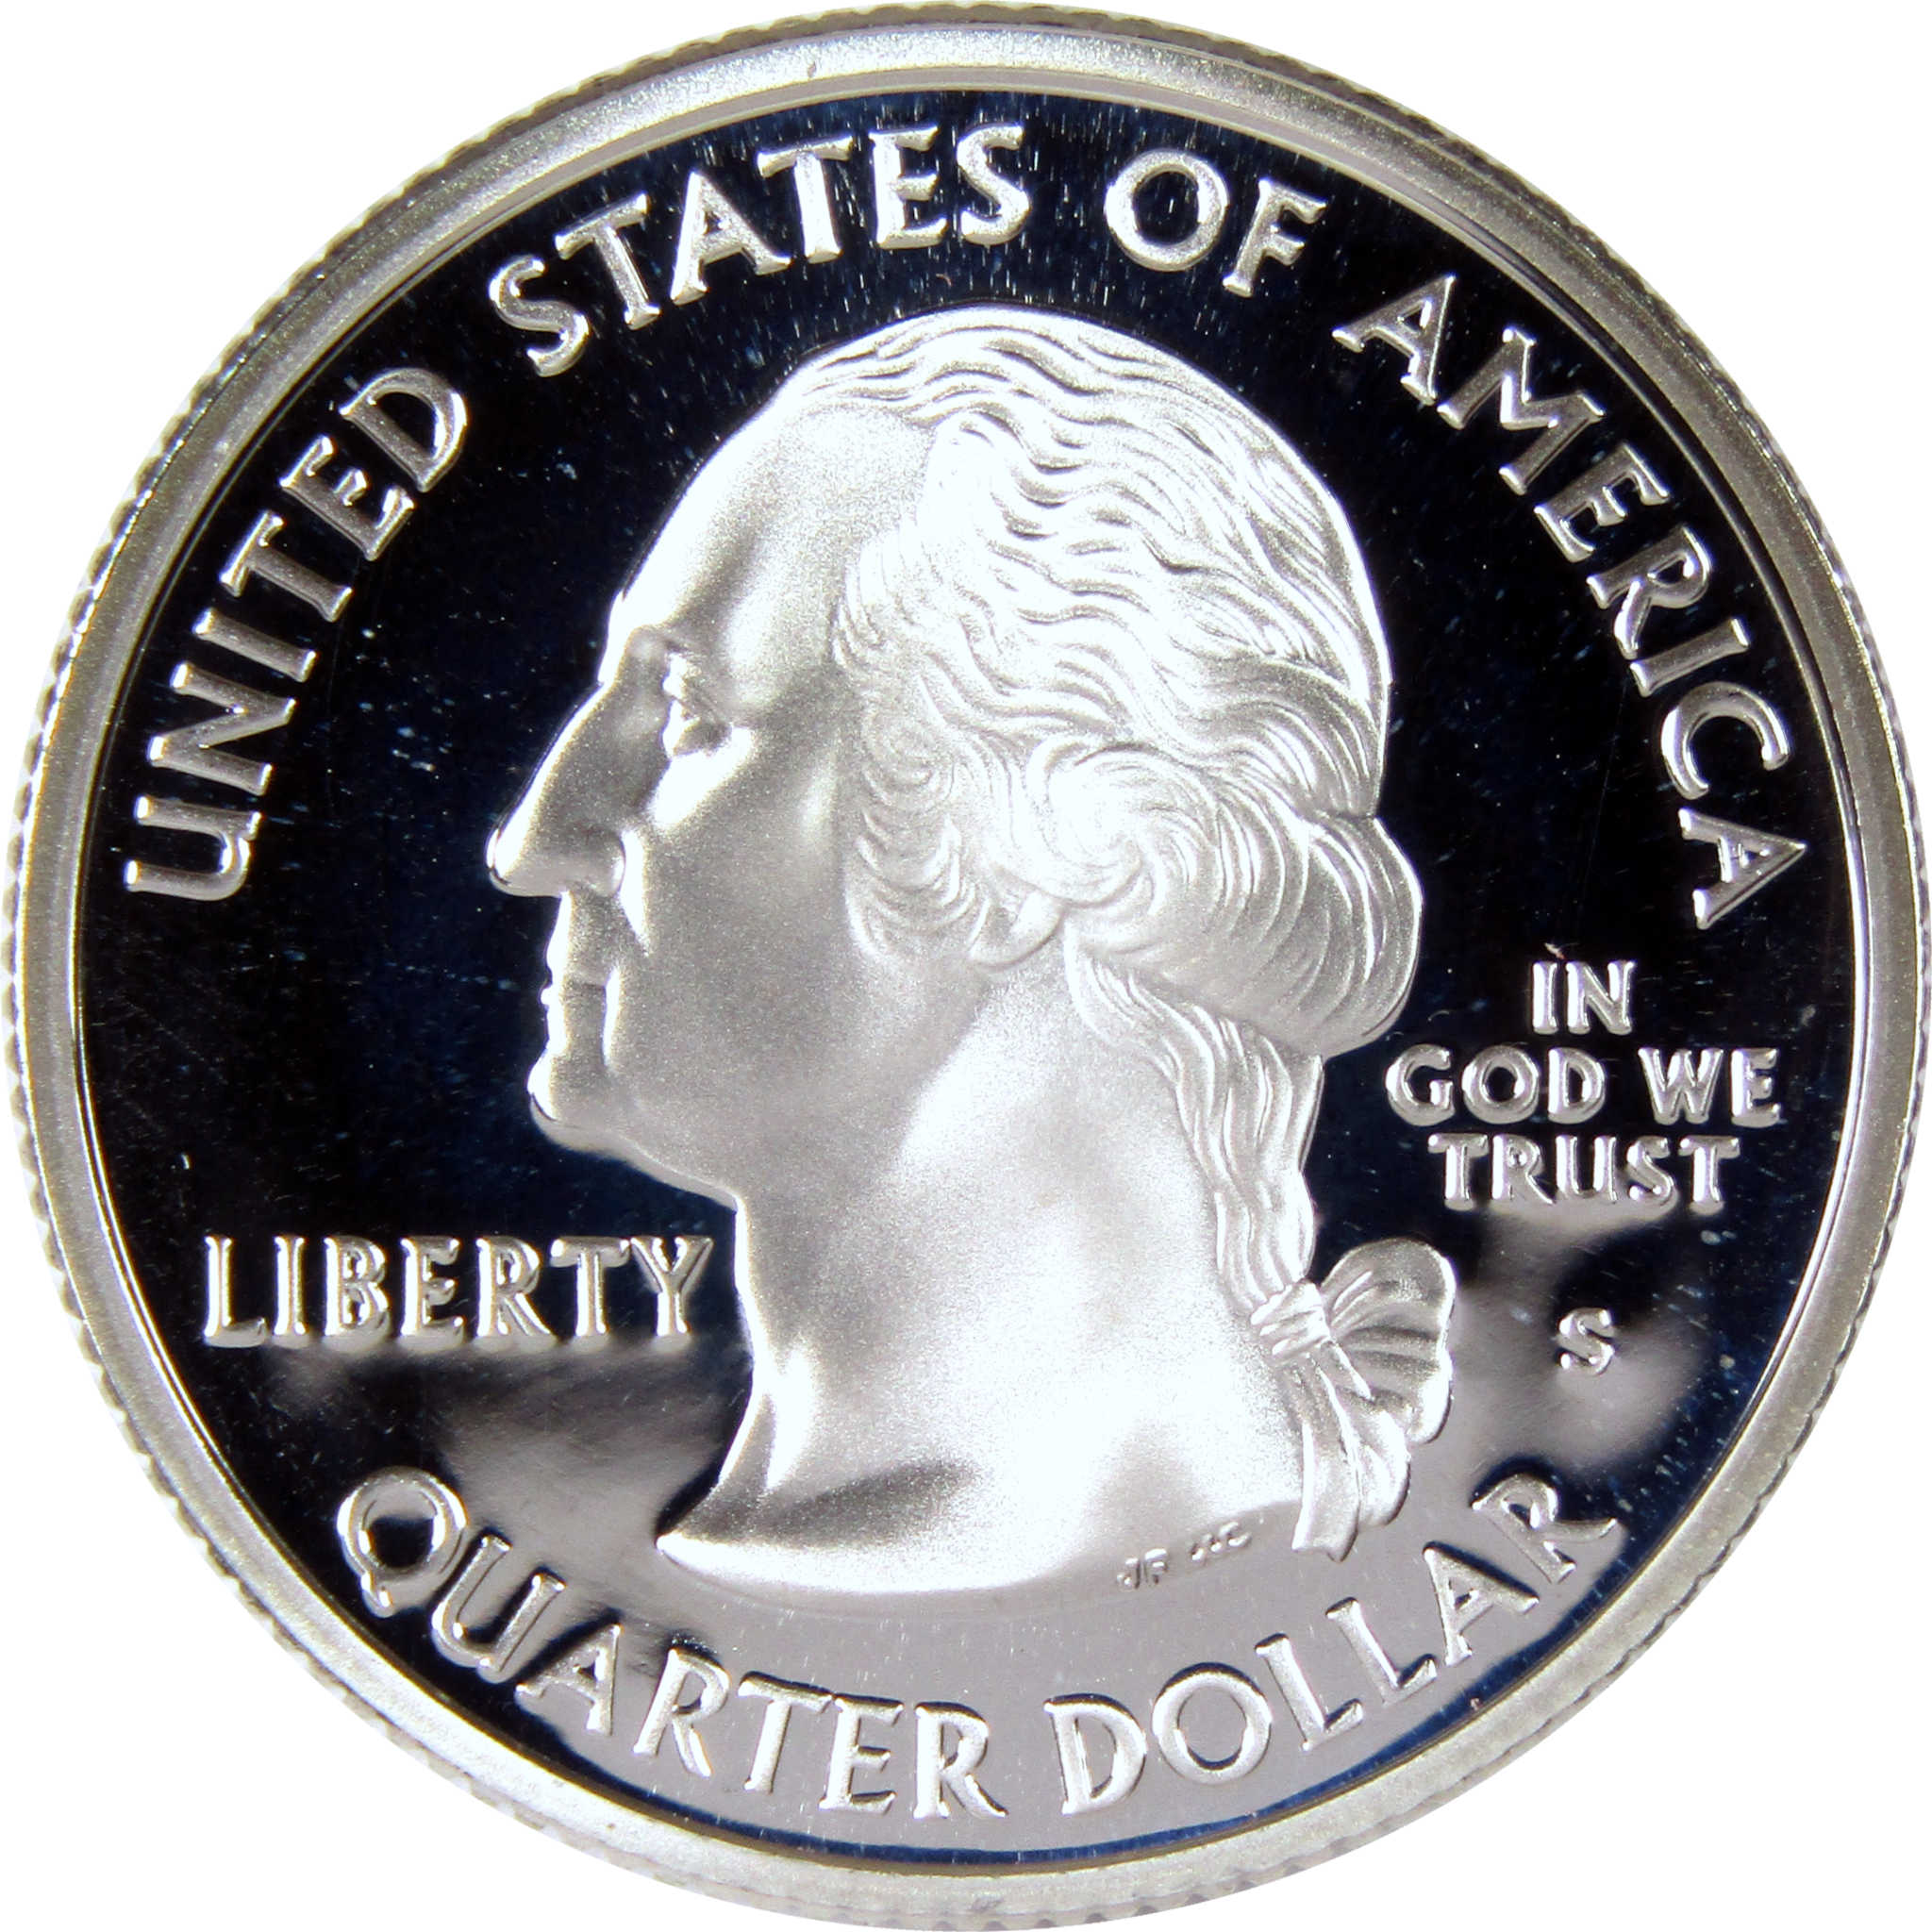 2006 S South Dakota State Quarter Silver 25c Proof Coin